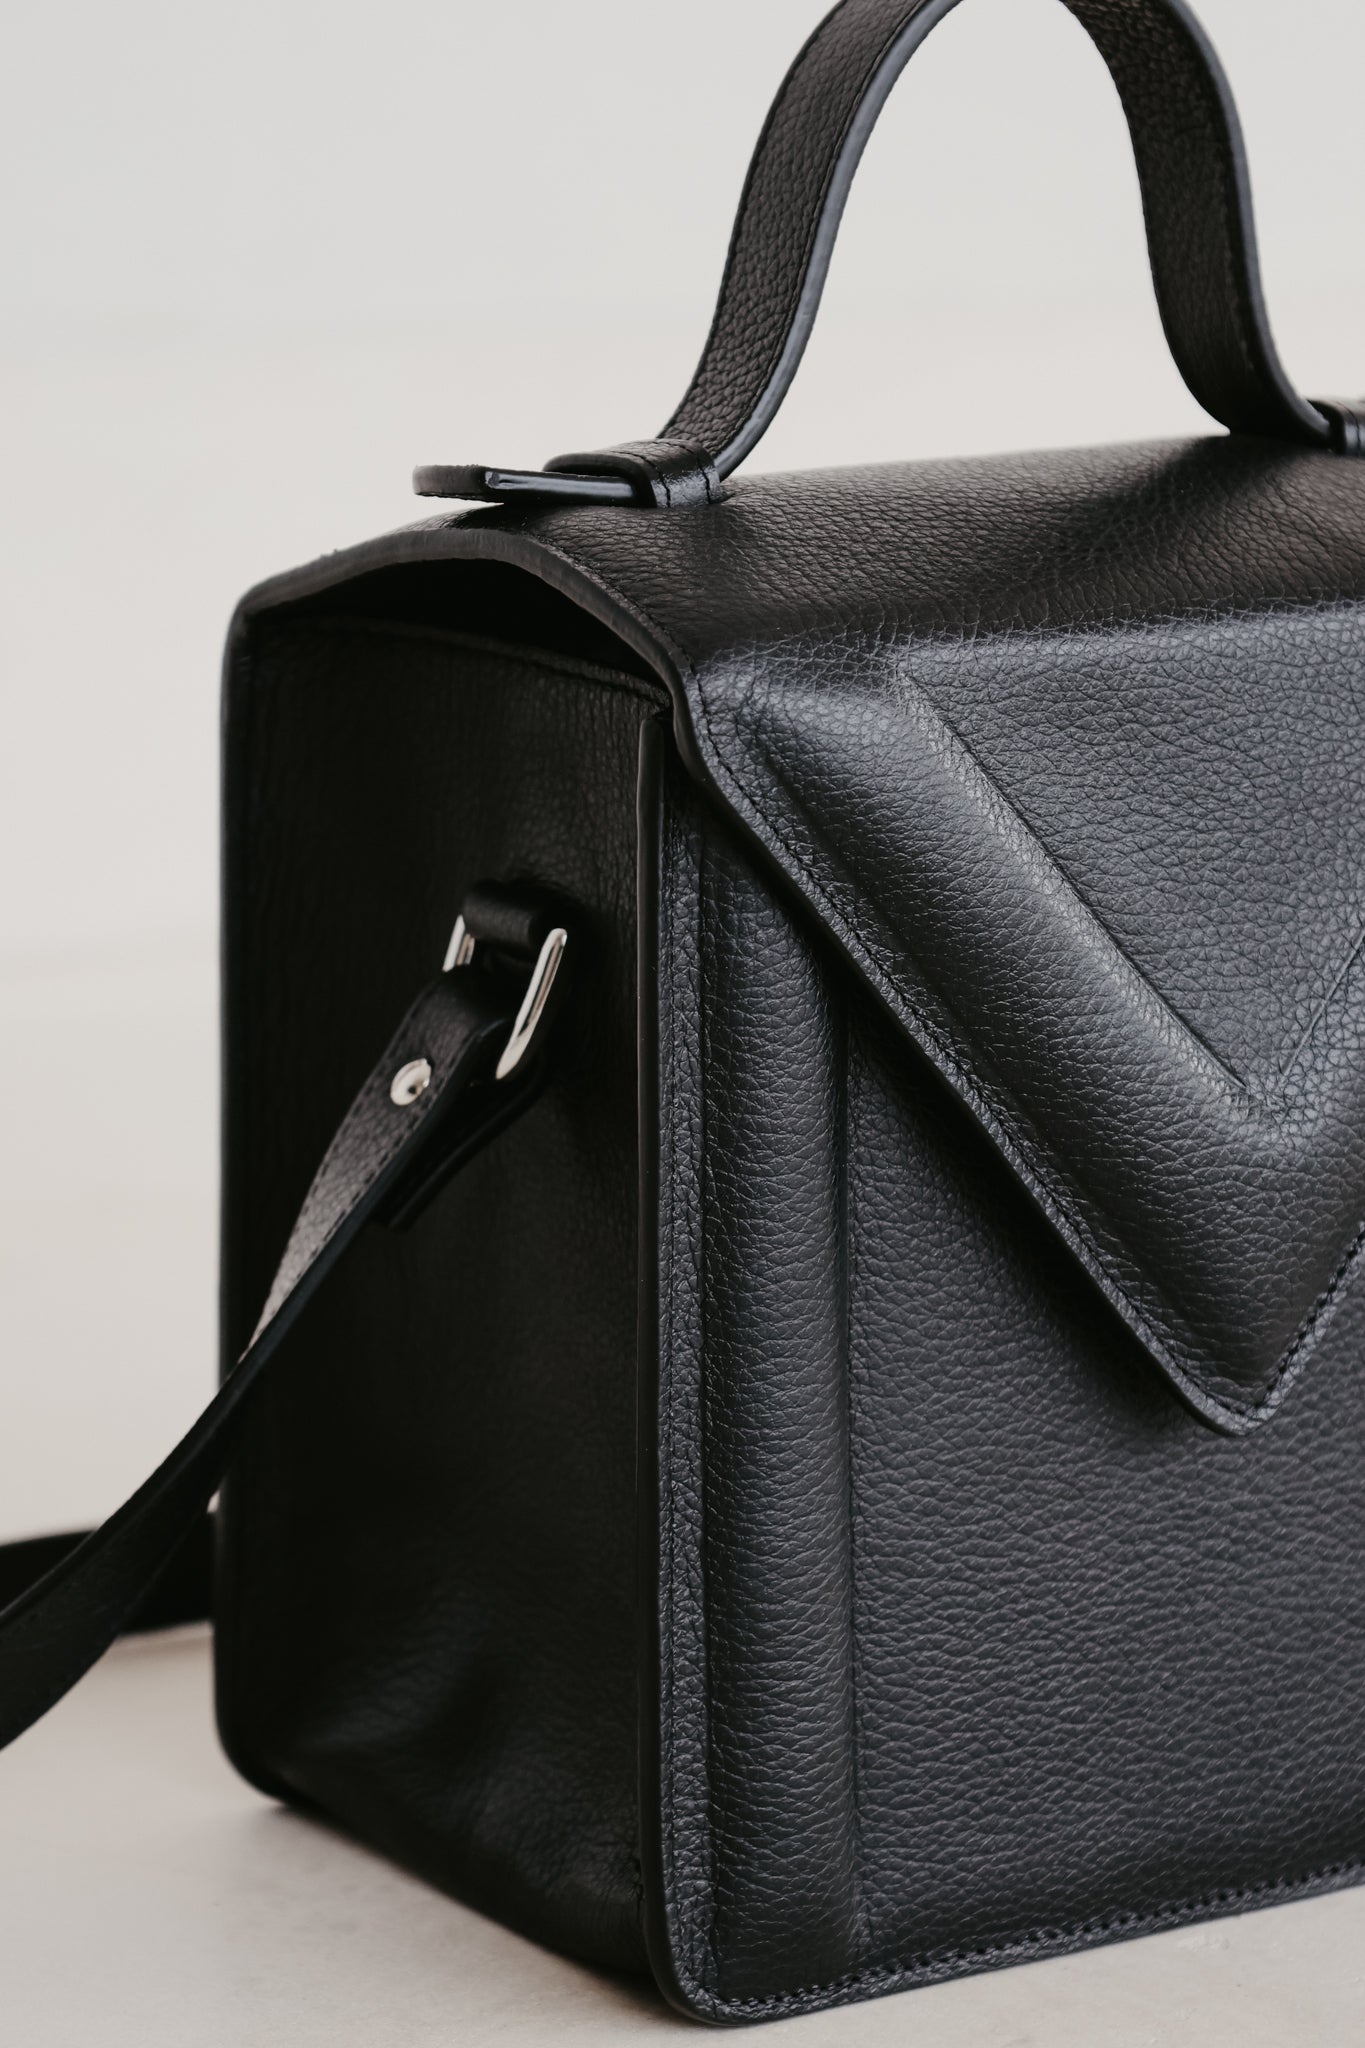 Boxbag | Black Structured